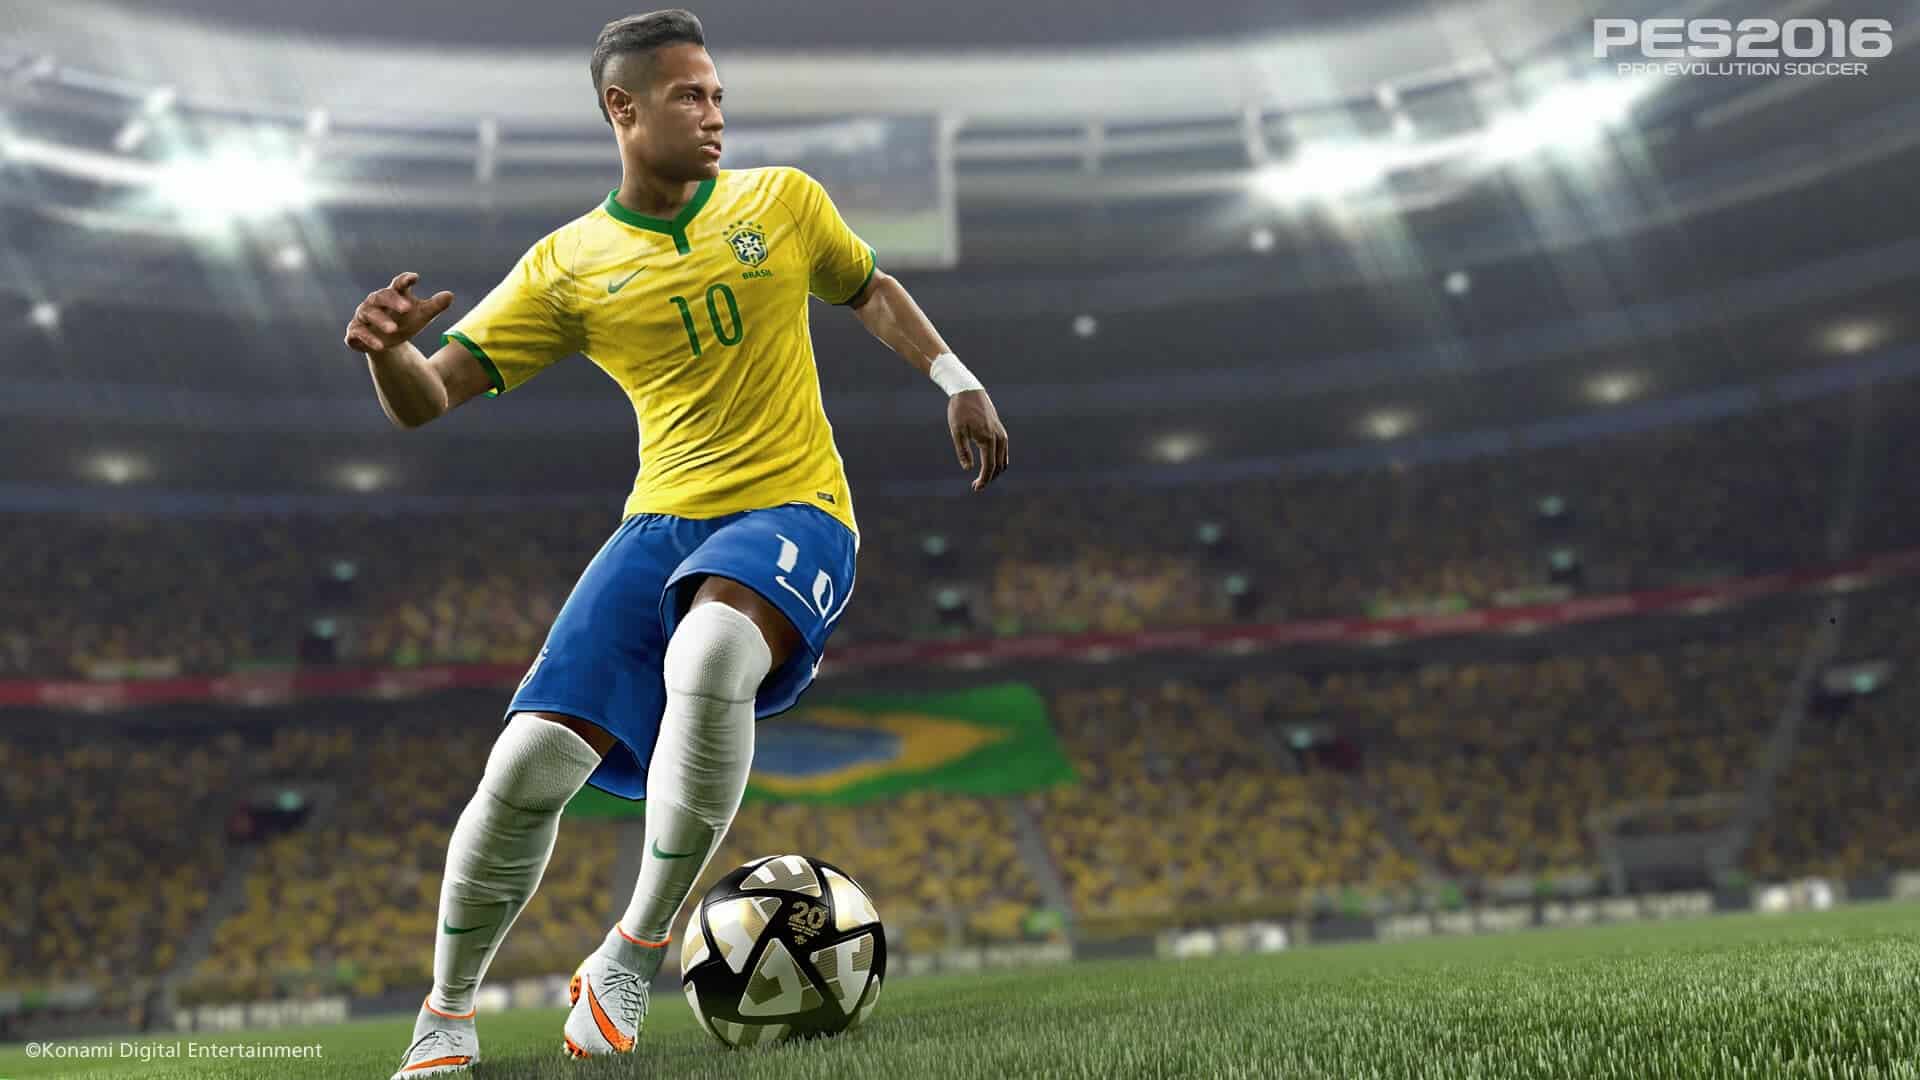 Pro Evolution Soccer 2016 Kostenlos Download